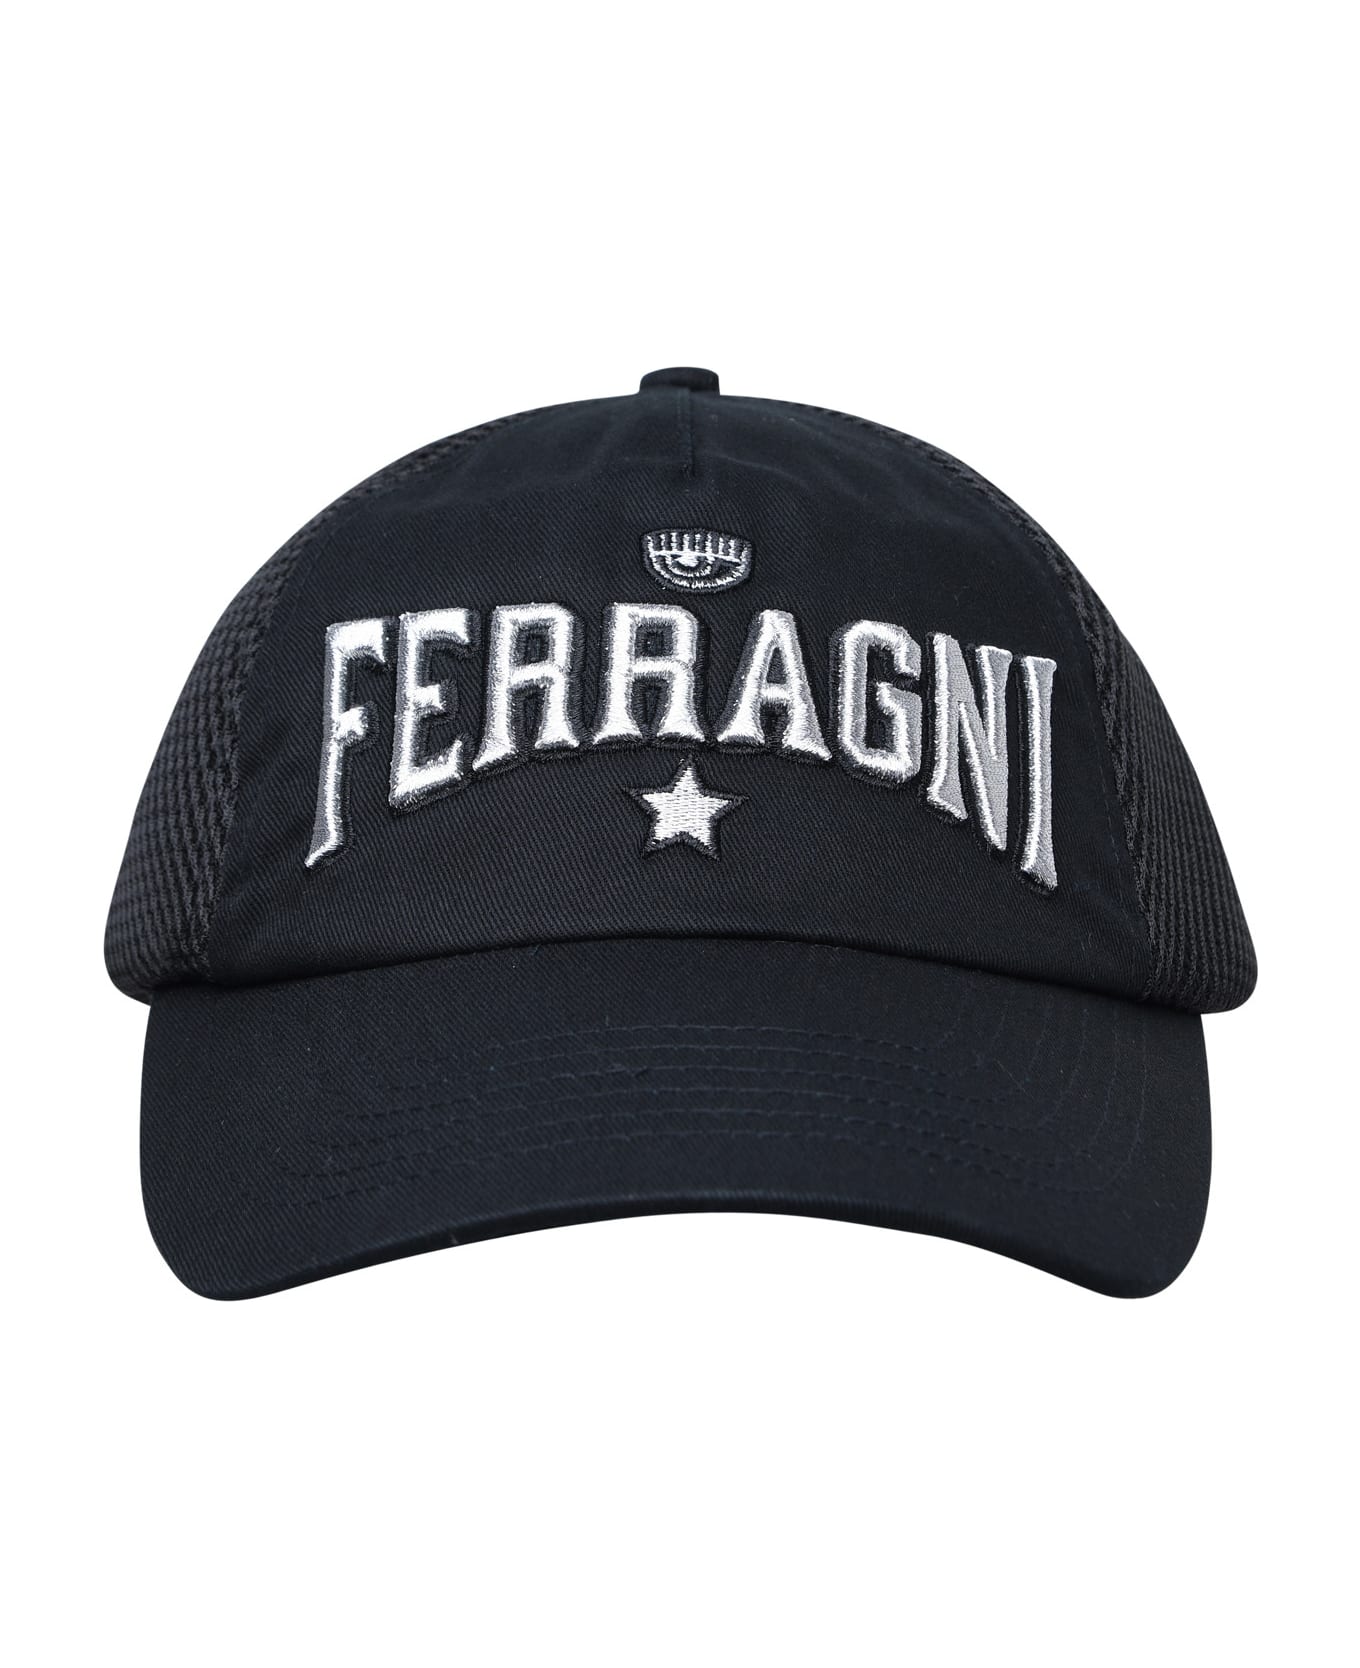 Chiara Ferragni Hat In Black Cotton Blend - Black